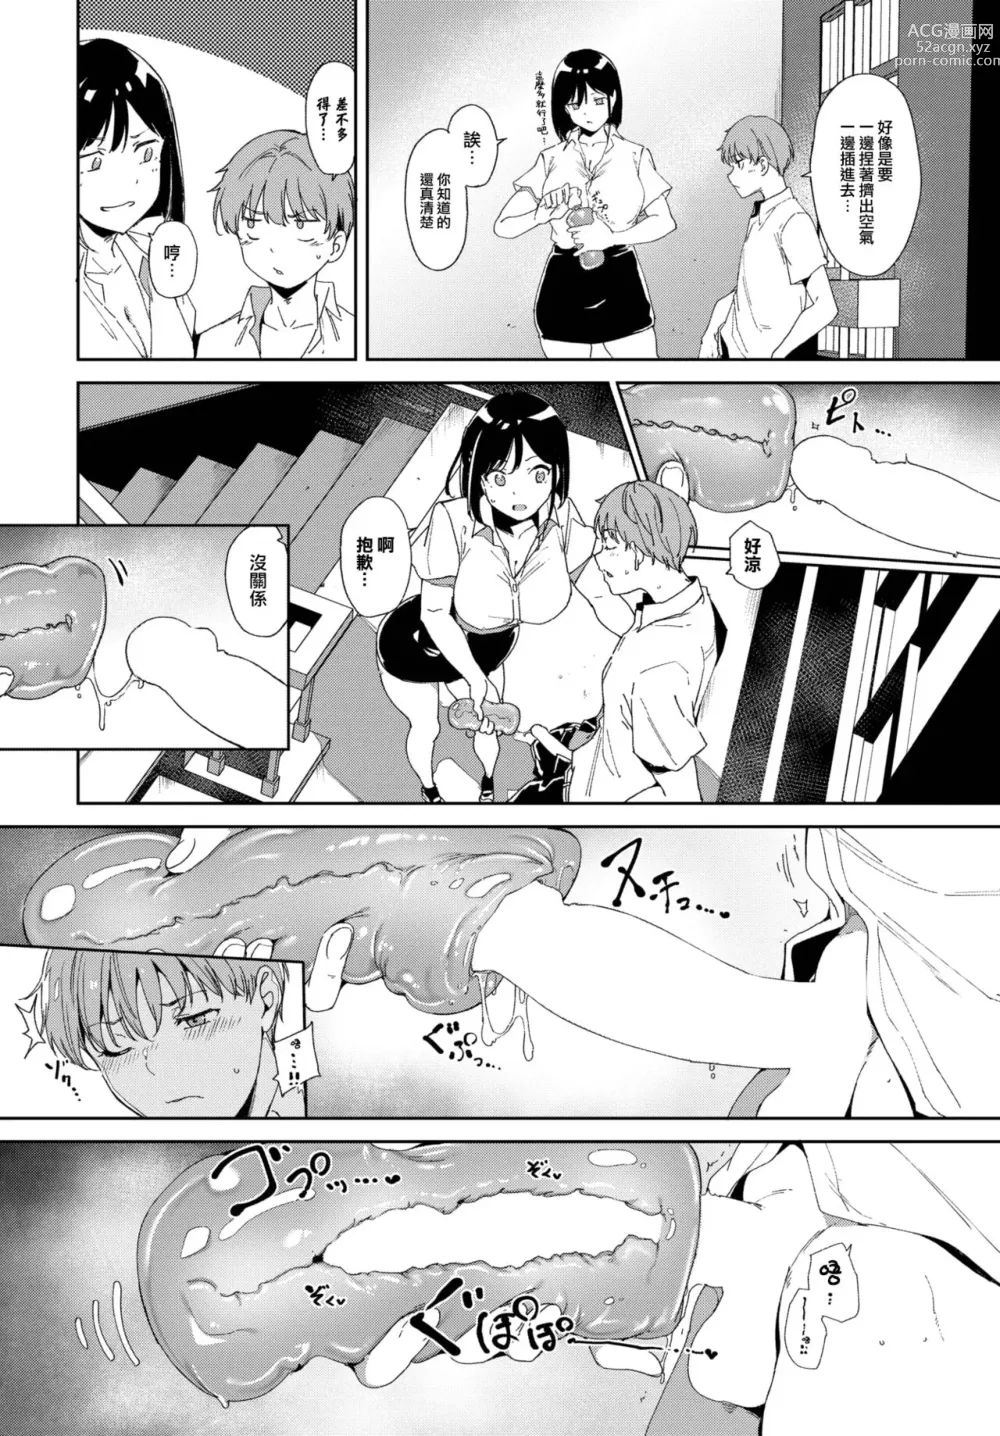 Page 3 of manga Routine2